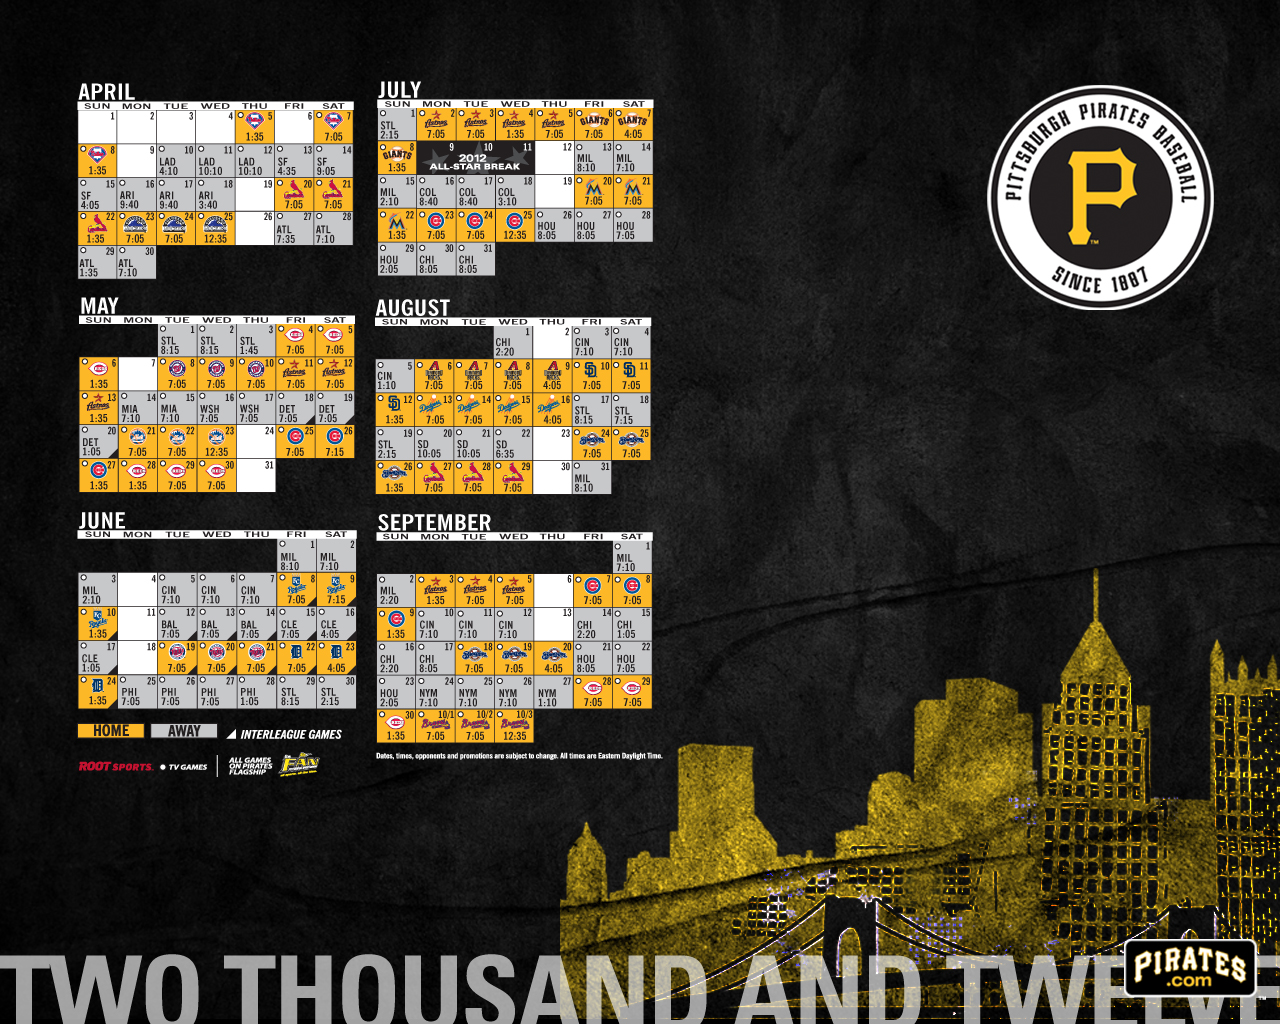 Pirates Desktop Wallpaper Pittsburgh